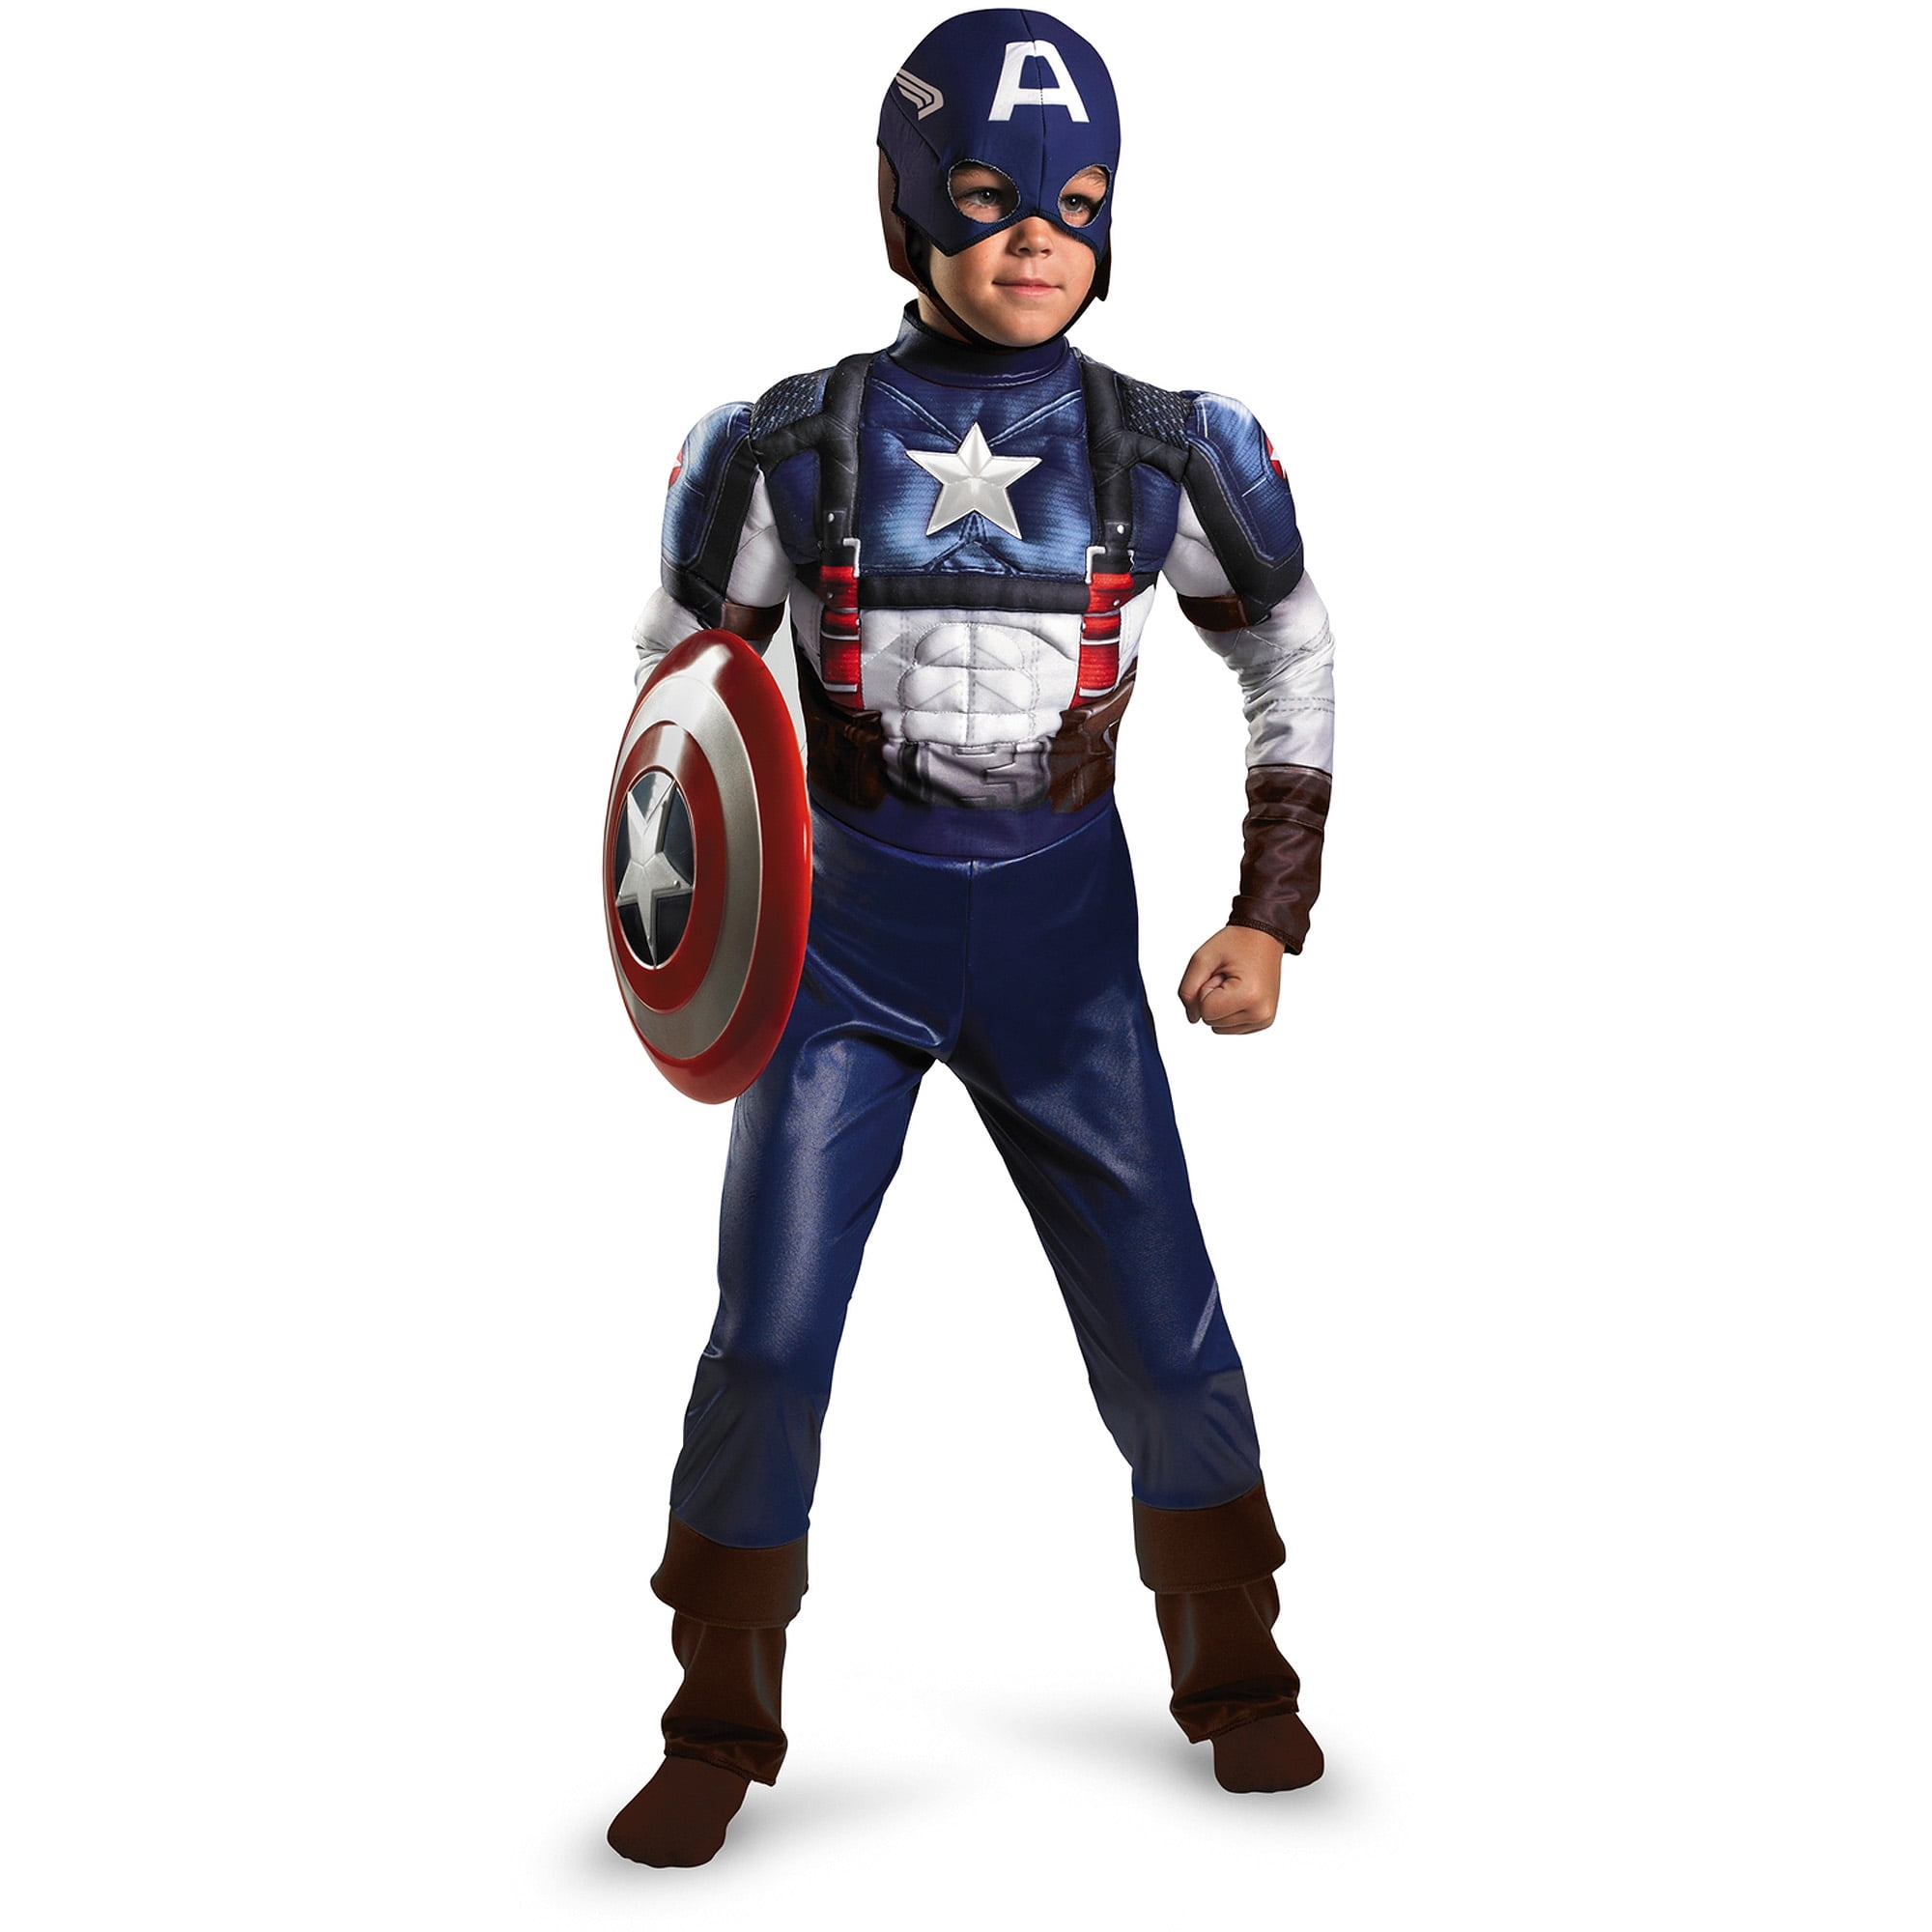 Costume de Captain America 0-12 mois